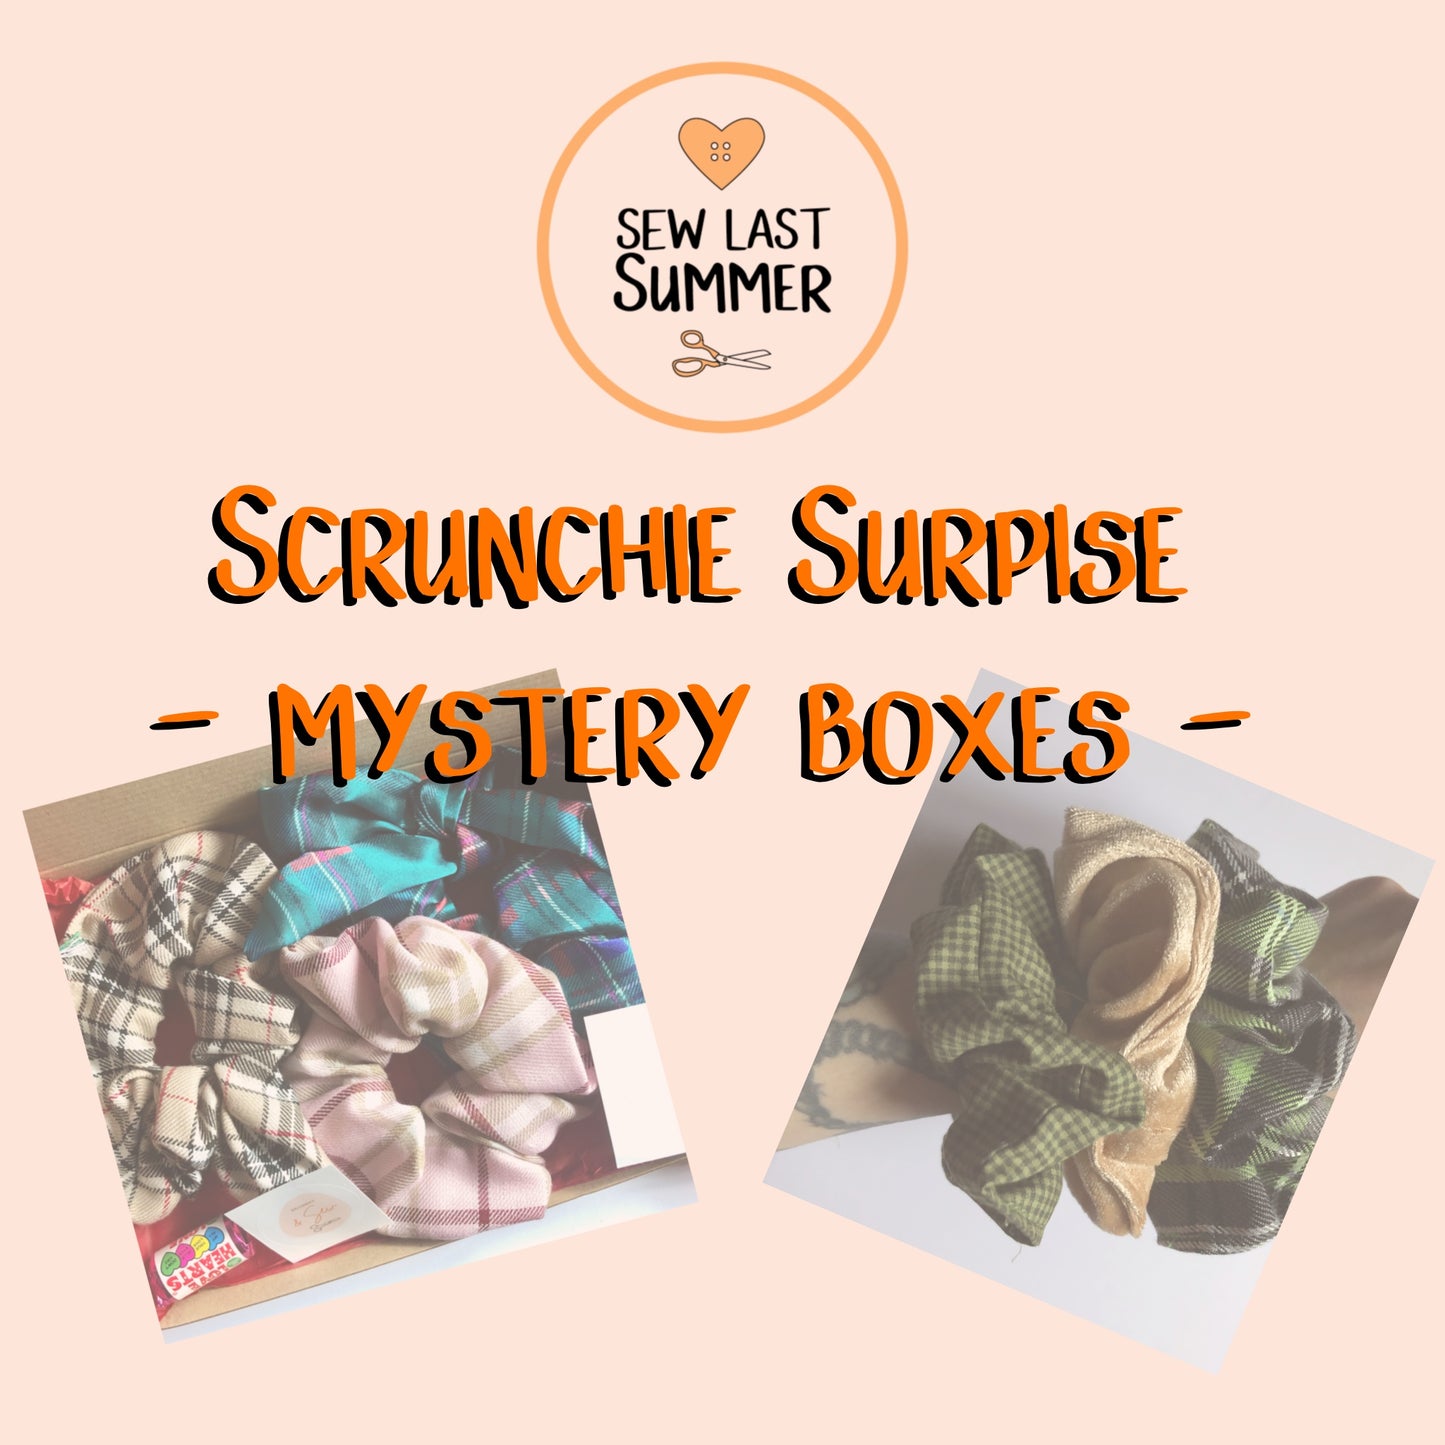 Scrunchie Mystery Box - Mini Size